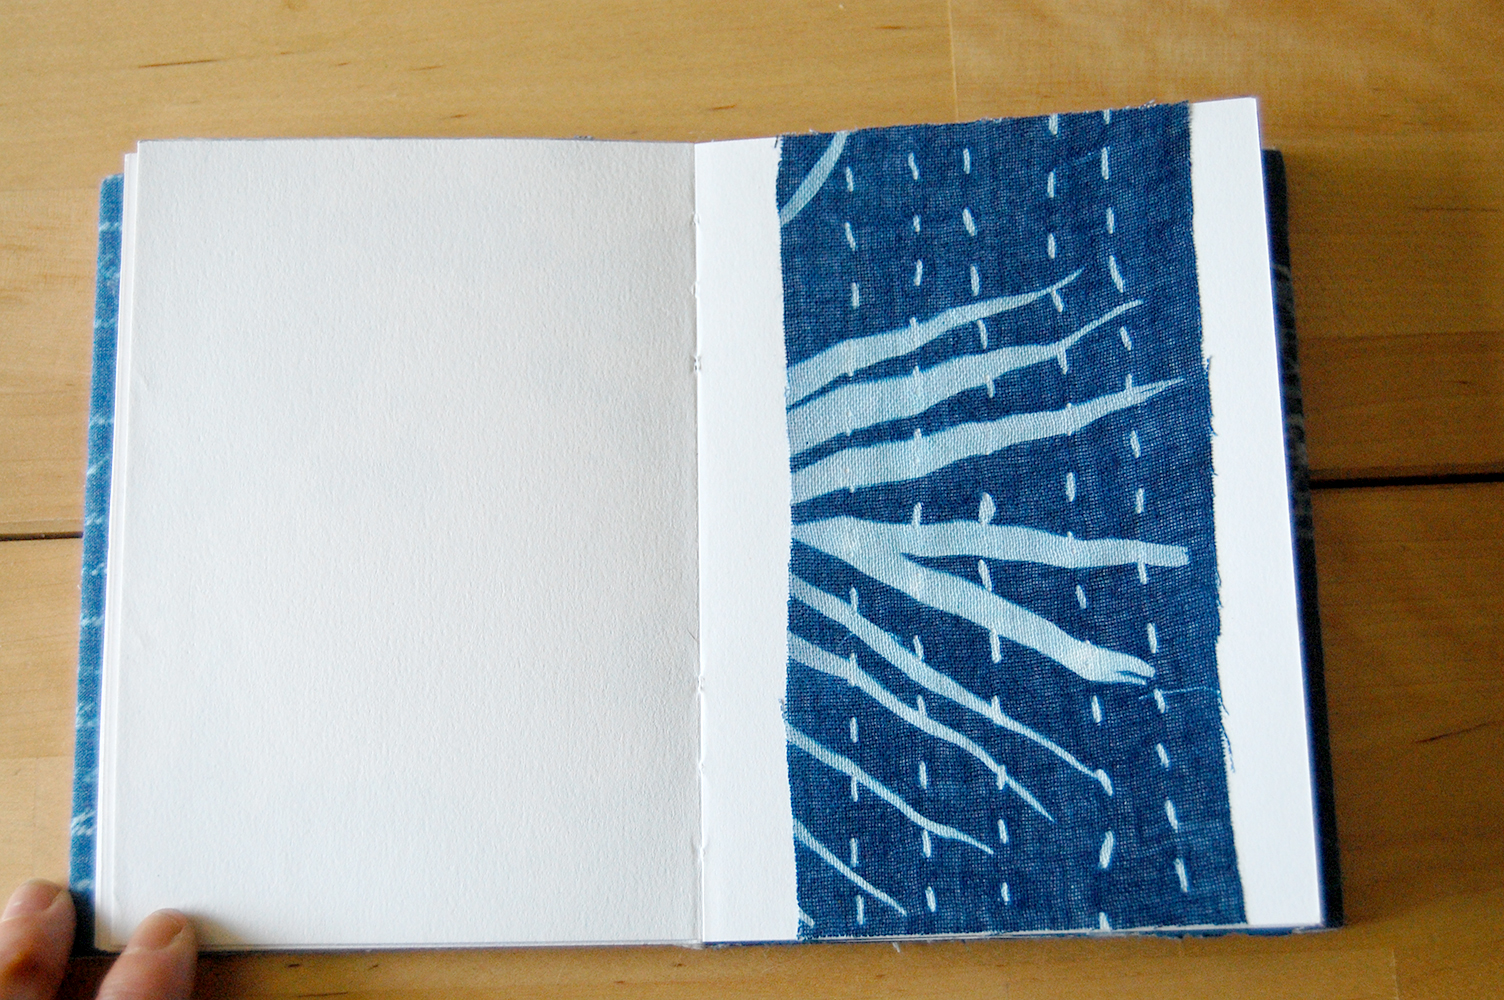  ​cyanotype print on cotton. 